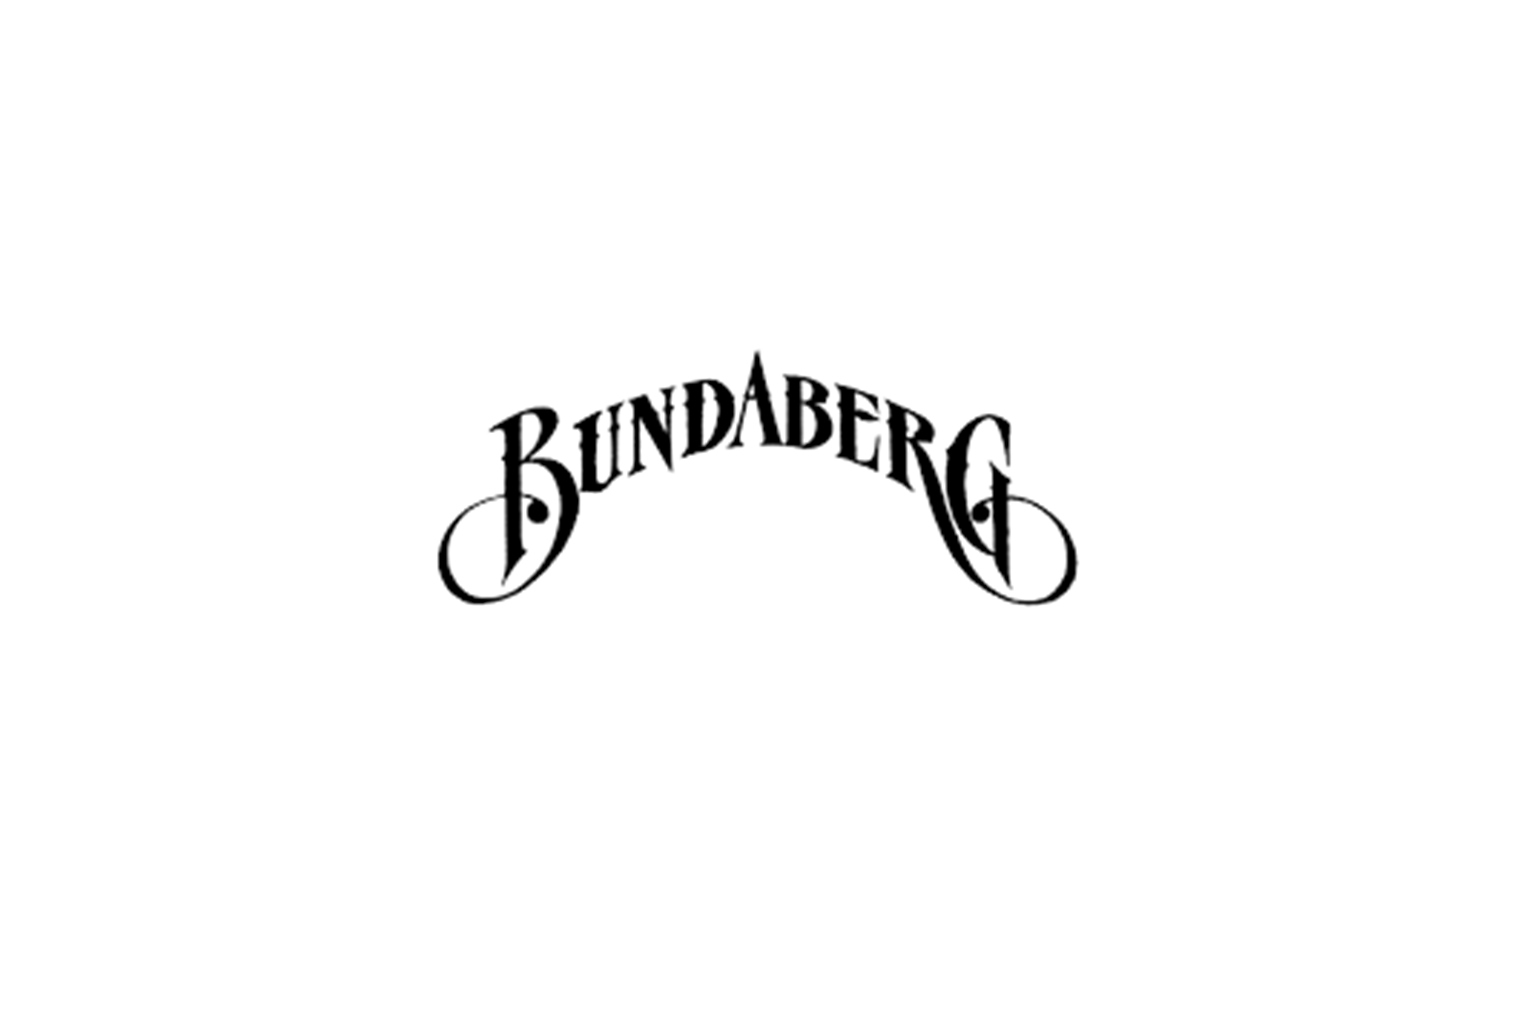 Bundaberg brewed drinks logo